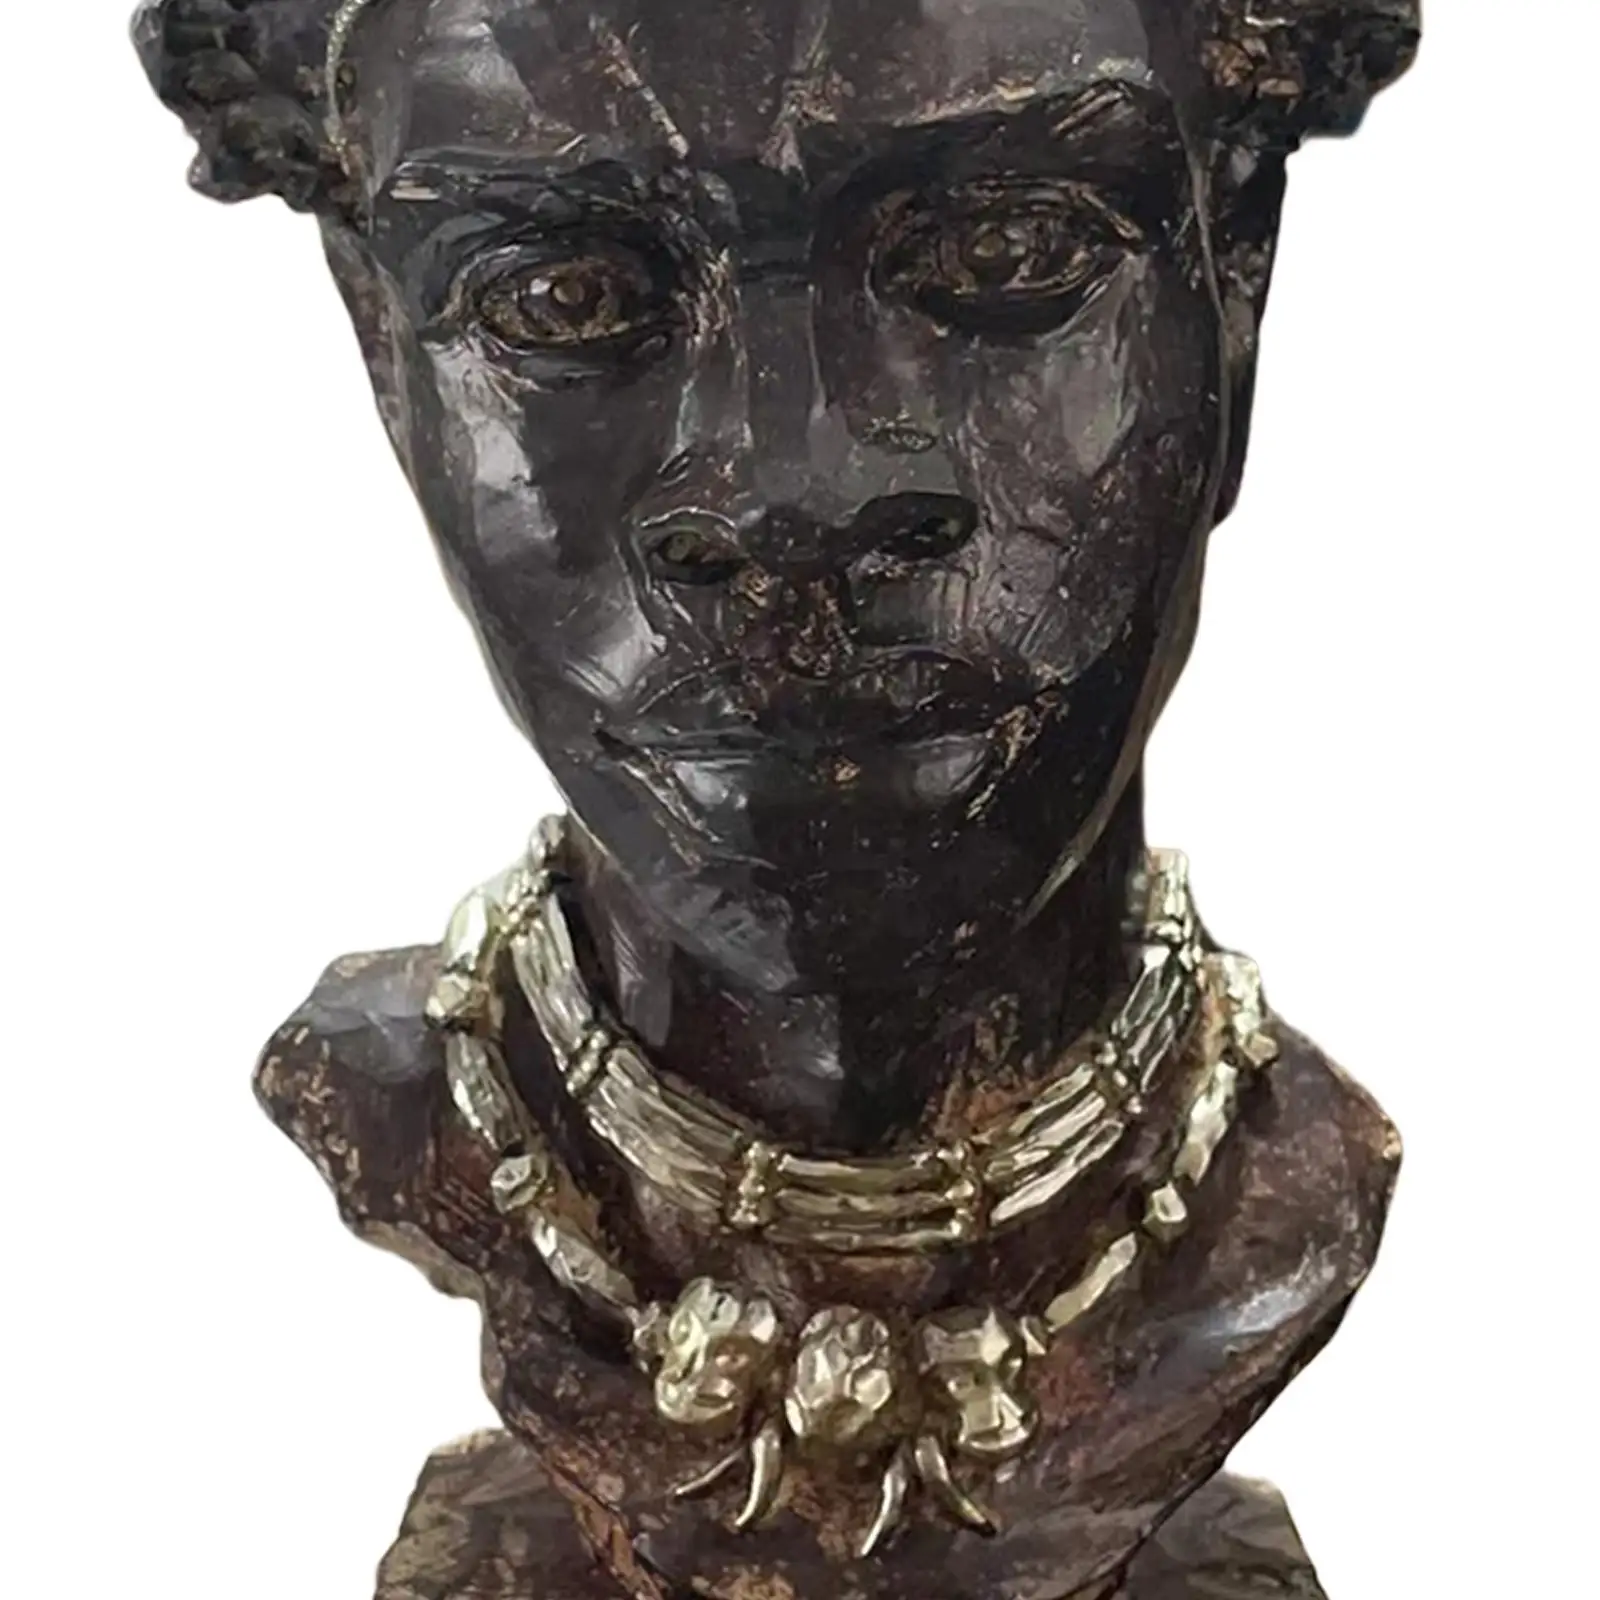 Men African Statue Sculpture Collectible Crafts Vintage Style Decoration Vivid Resin Figurines for Desktop Living Room Office